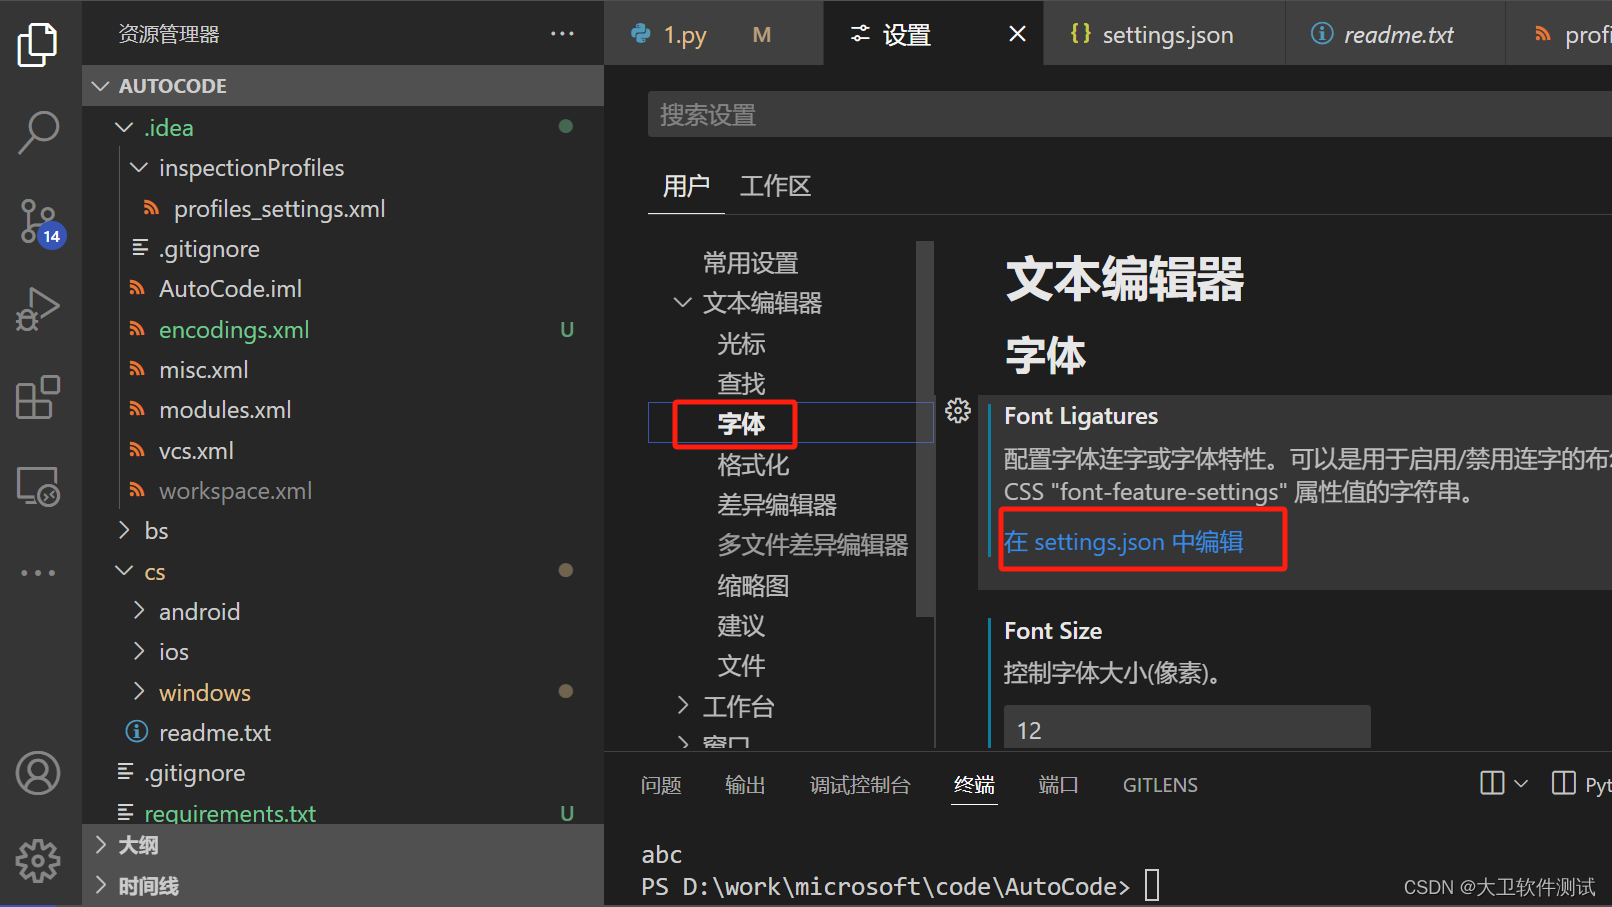 【vscode篇】1-VScode设置语言为中文，2-解决中文注释乱码问题。